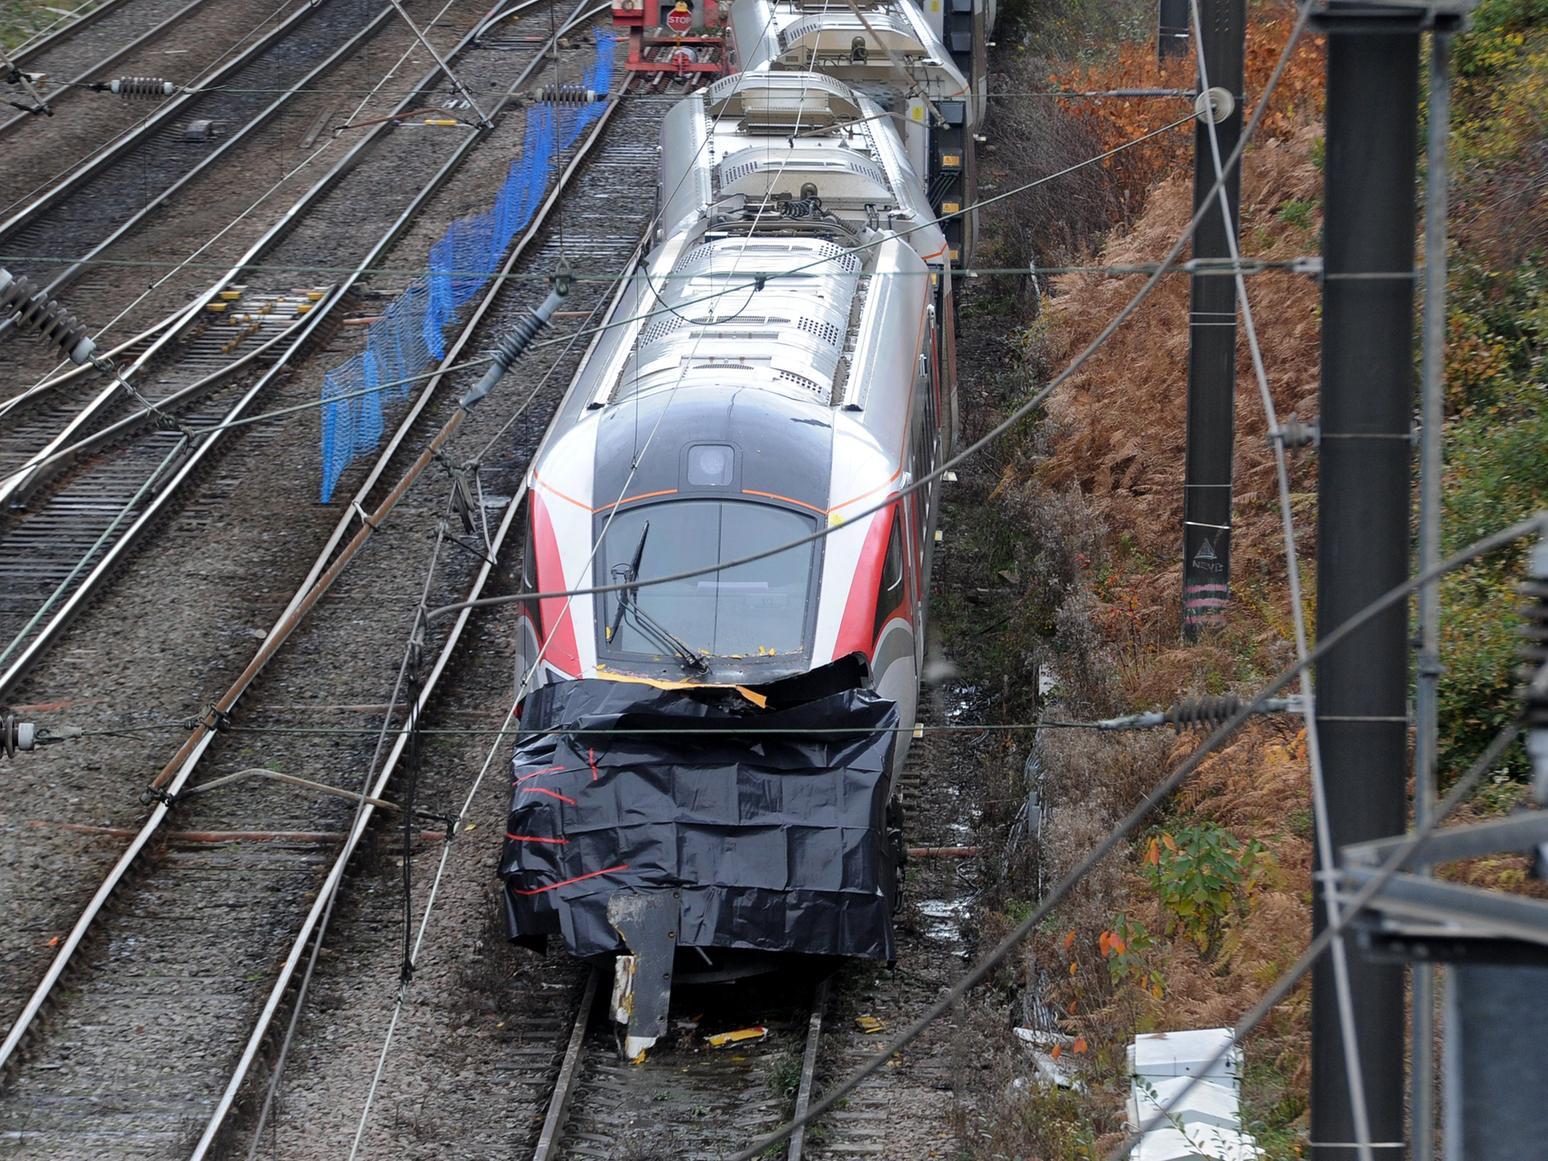 The Azuma train crashed at near the Leeds Station depot.